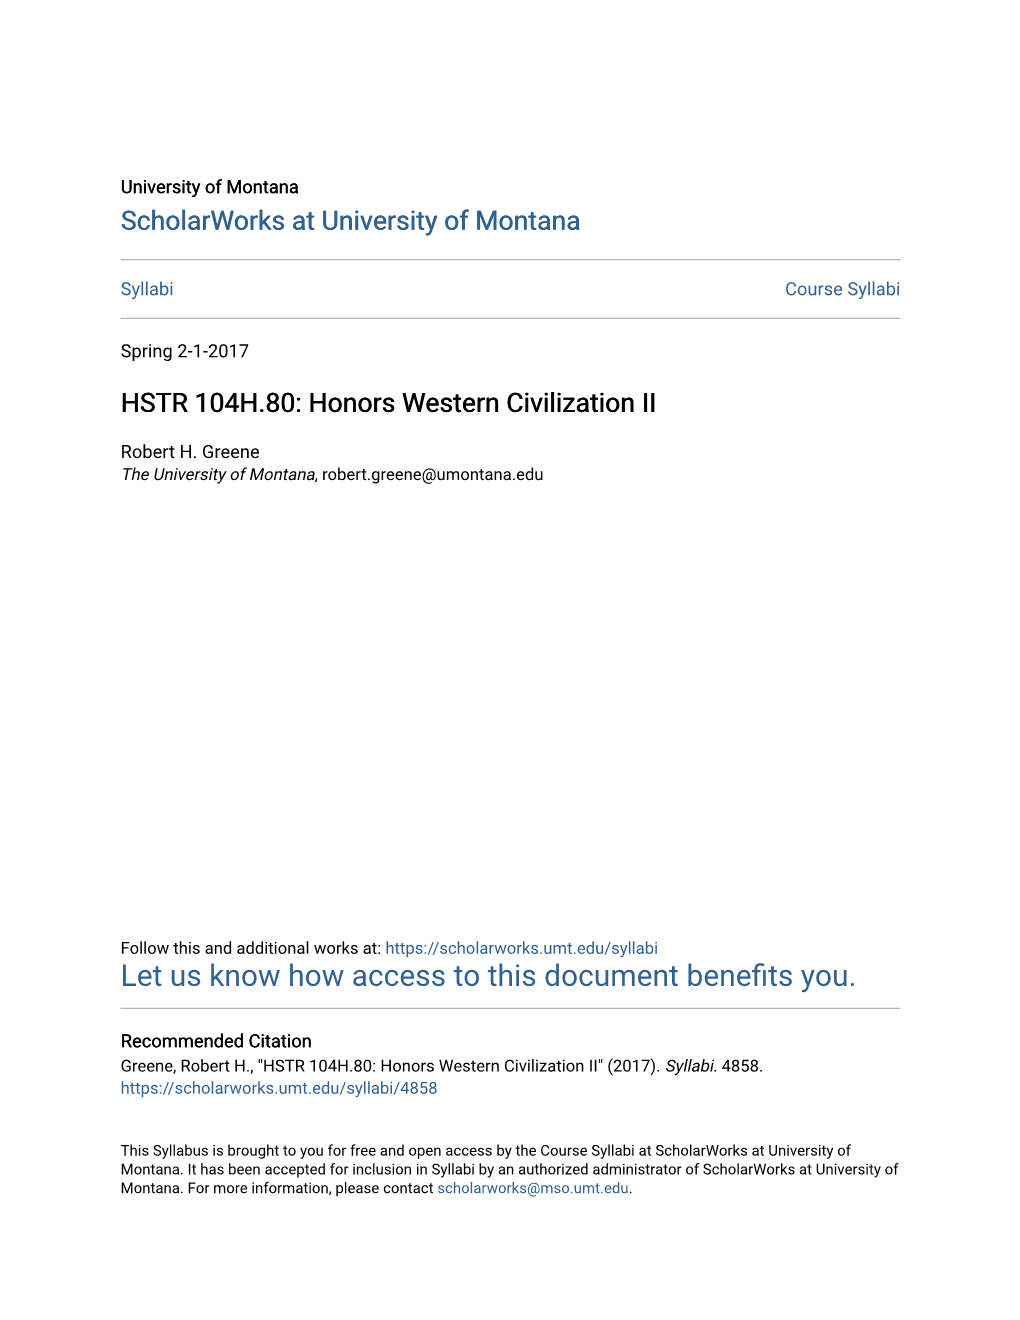 HSTR 104H.80: Honors Western Civilization II